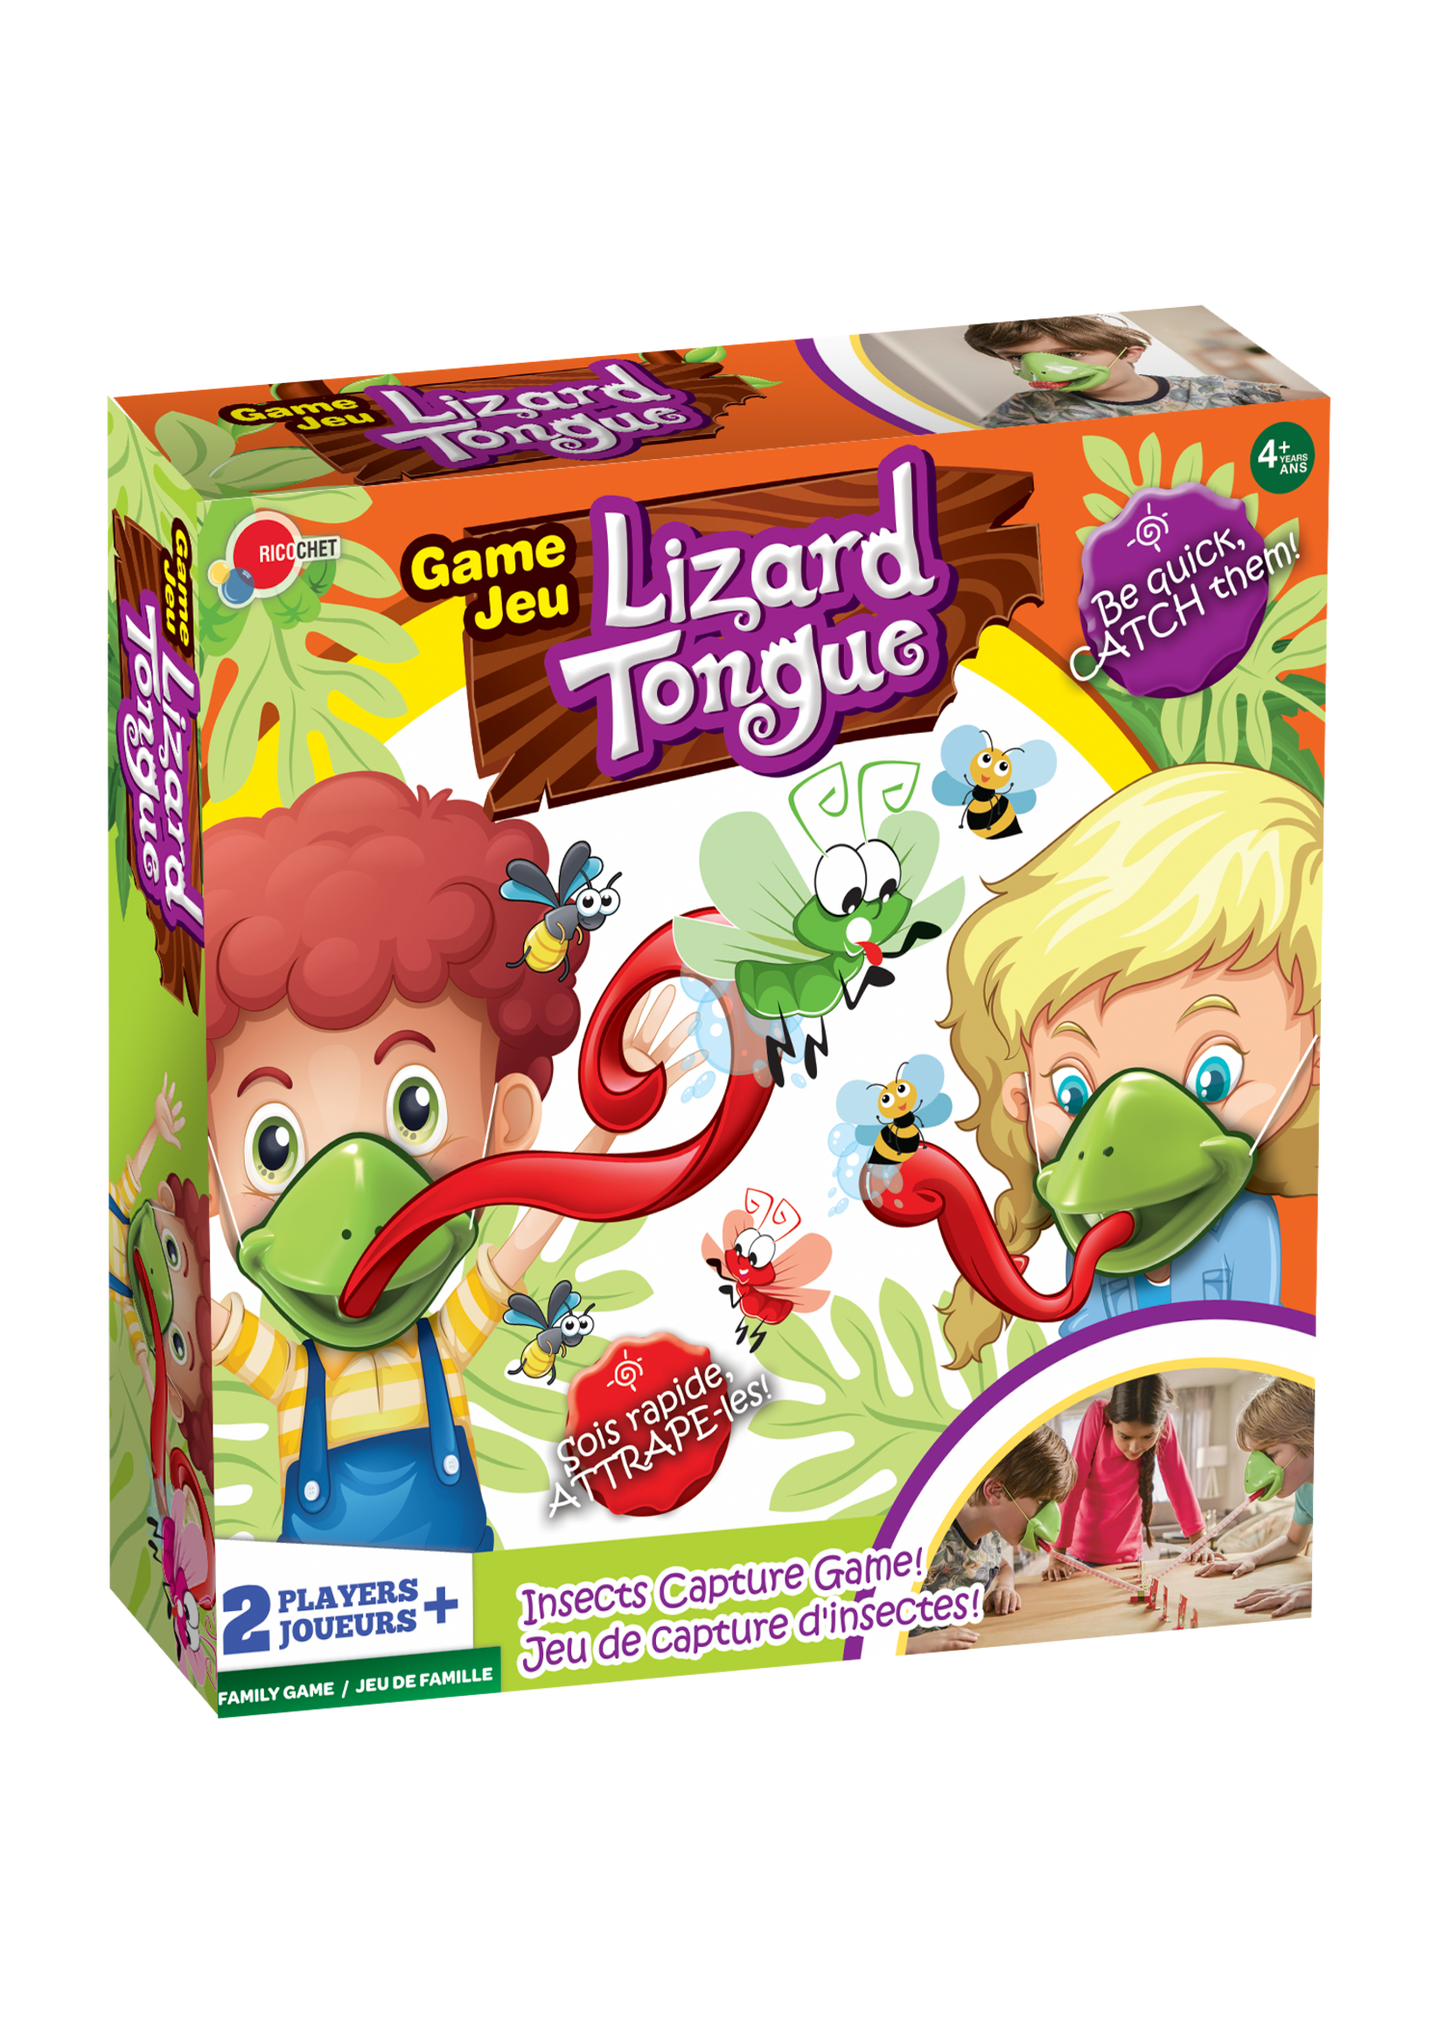 Lizard tongue game Ricochet